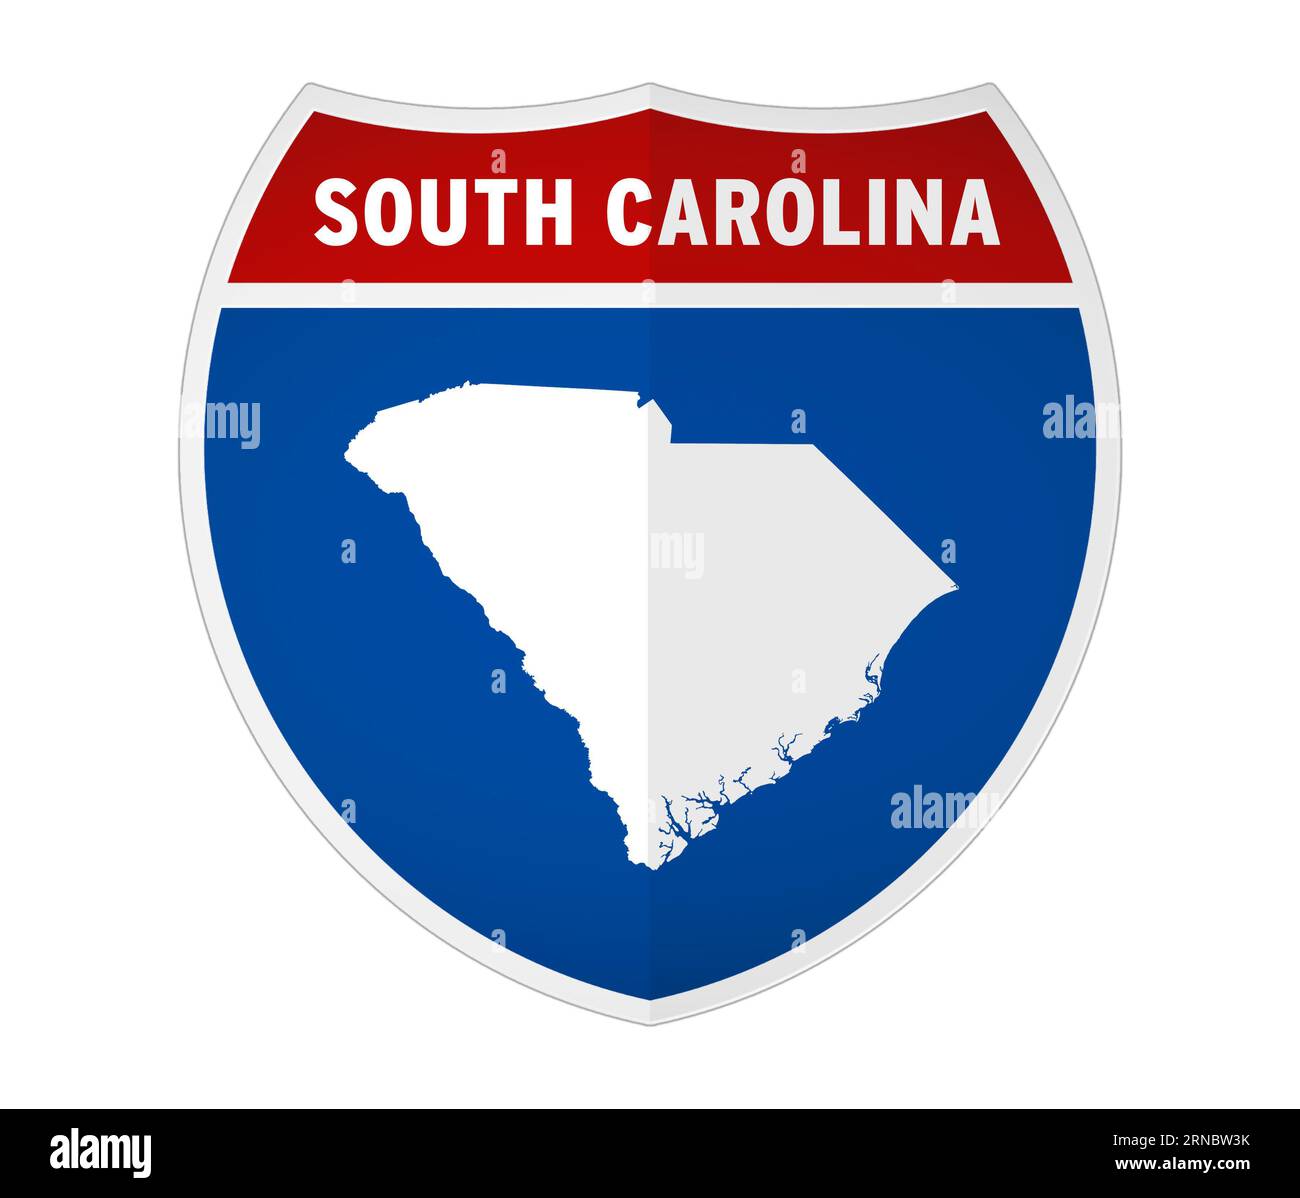 South Carolina - Interstate road sign Stock Photo